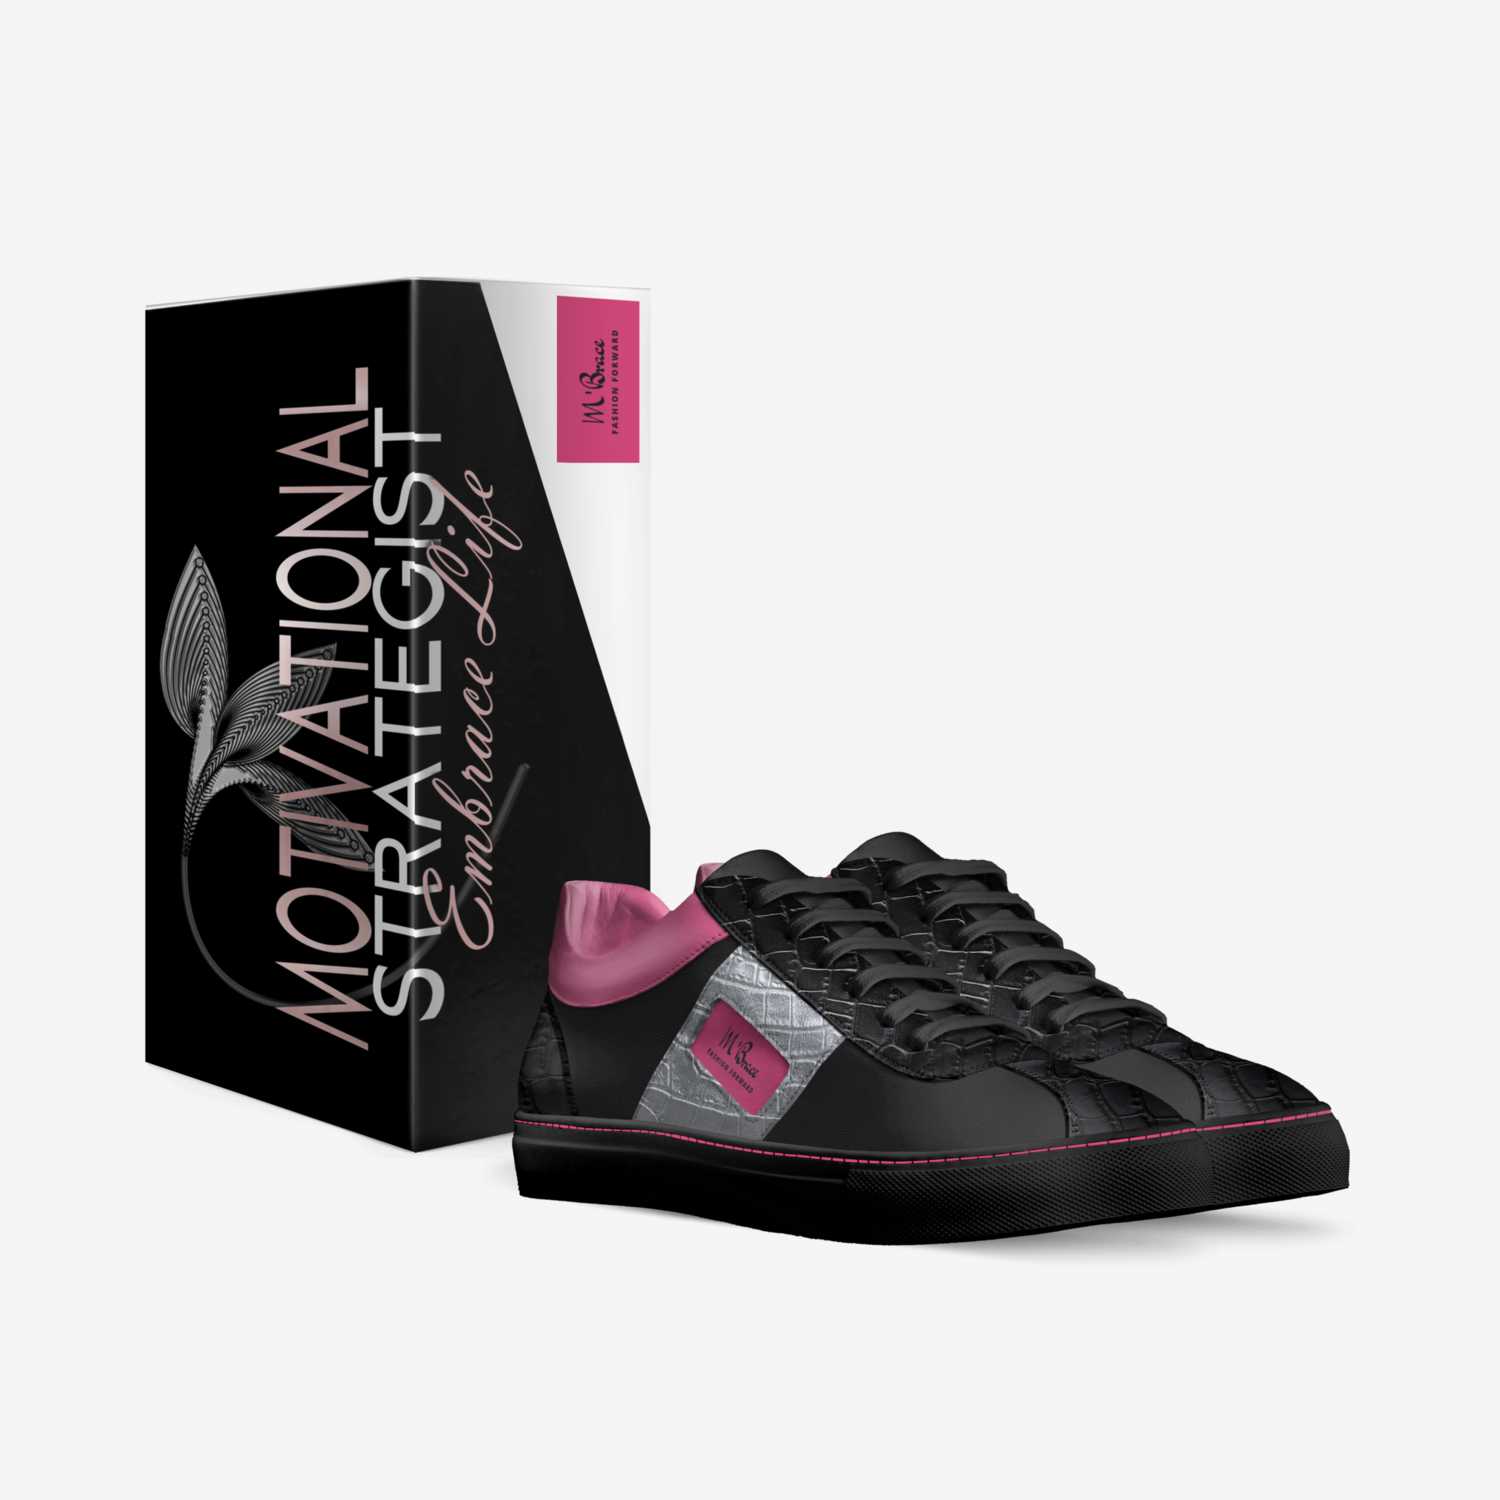 M'Brace custom made in Italy shoes by Regenia Harrell | Box view